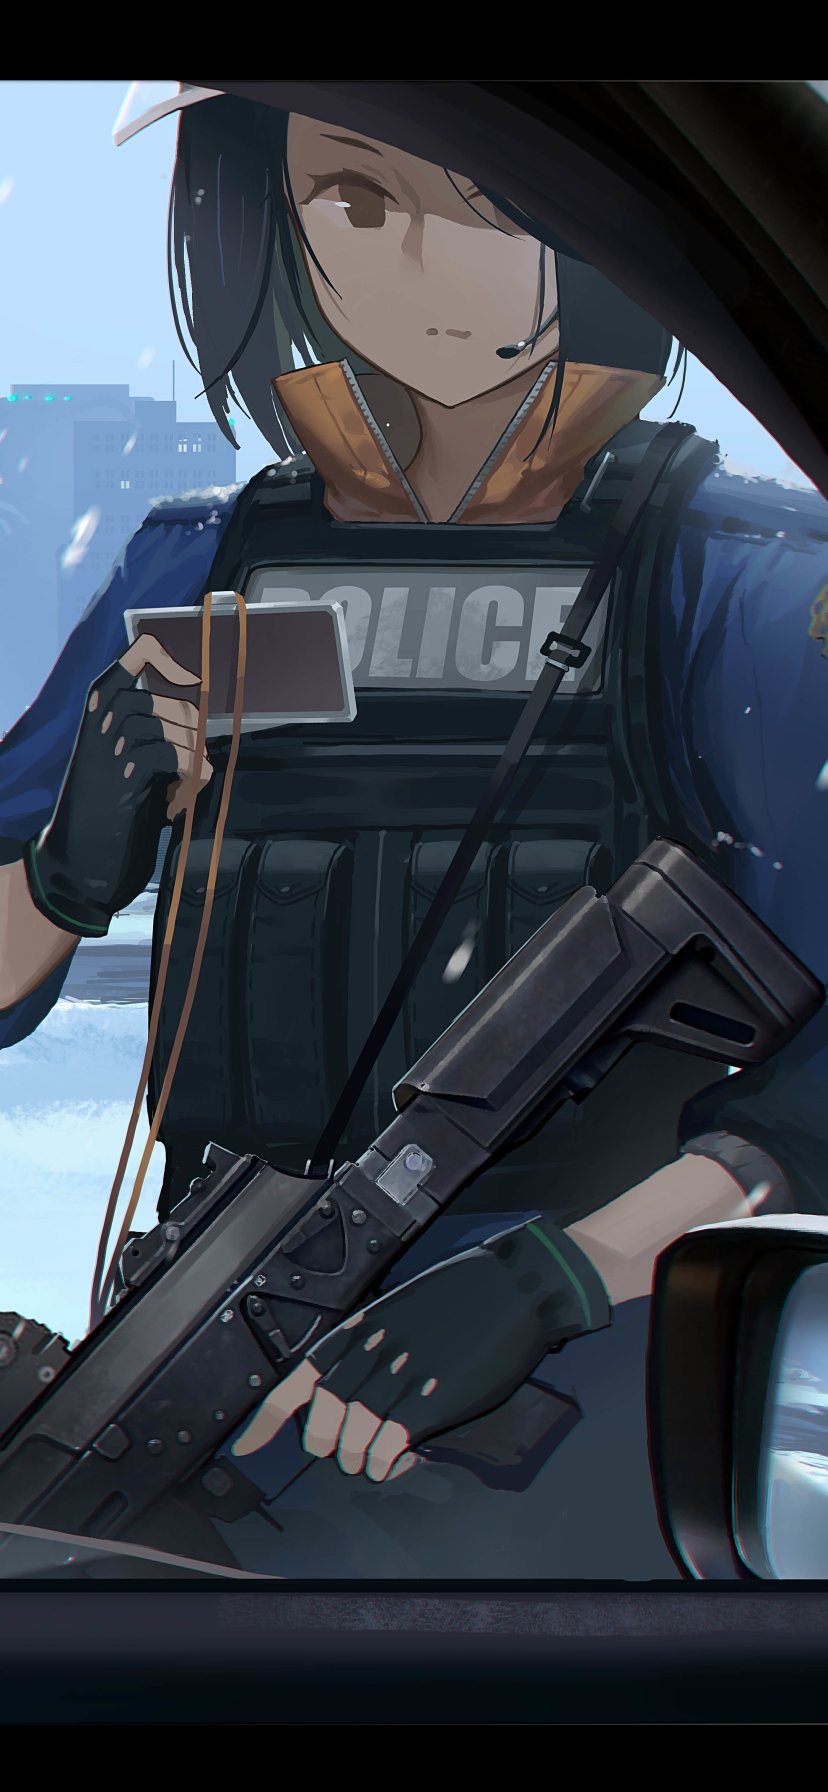 Anime Police Wallpapers